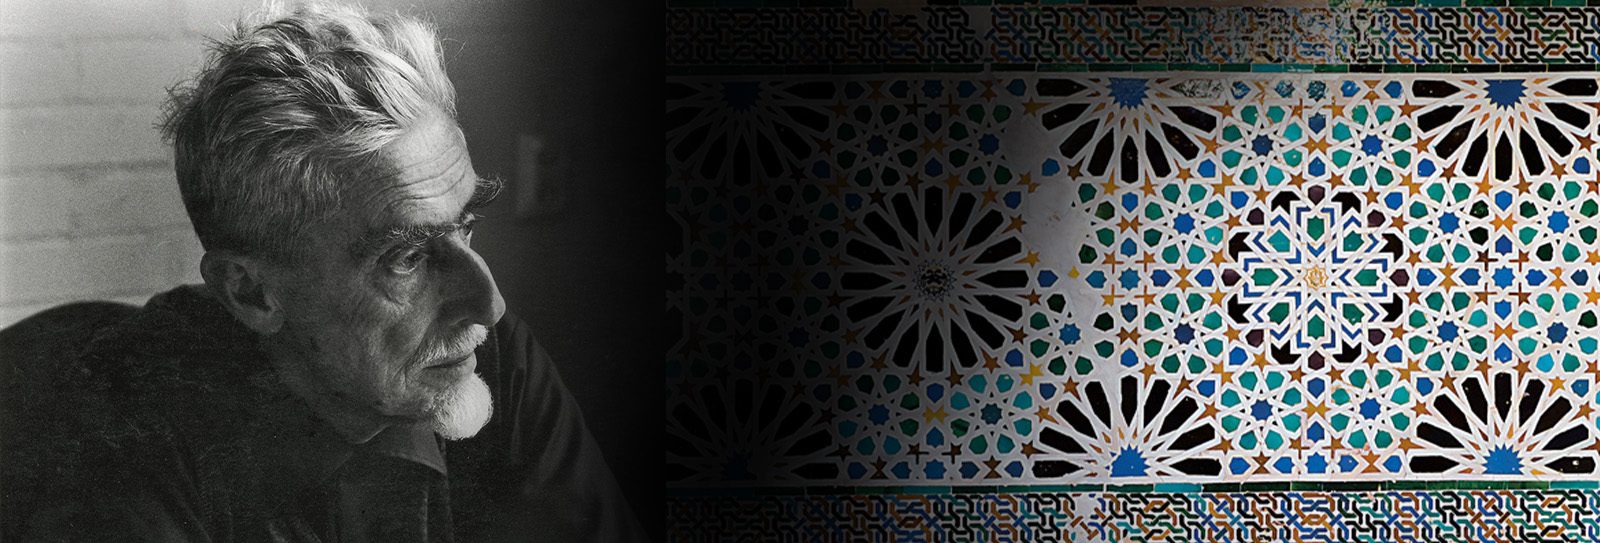 Escher + Alhambra = Infinity